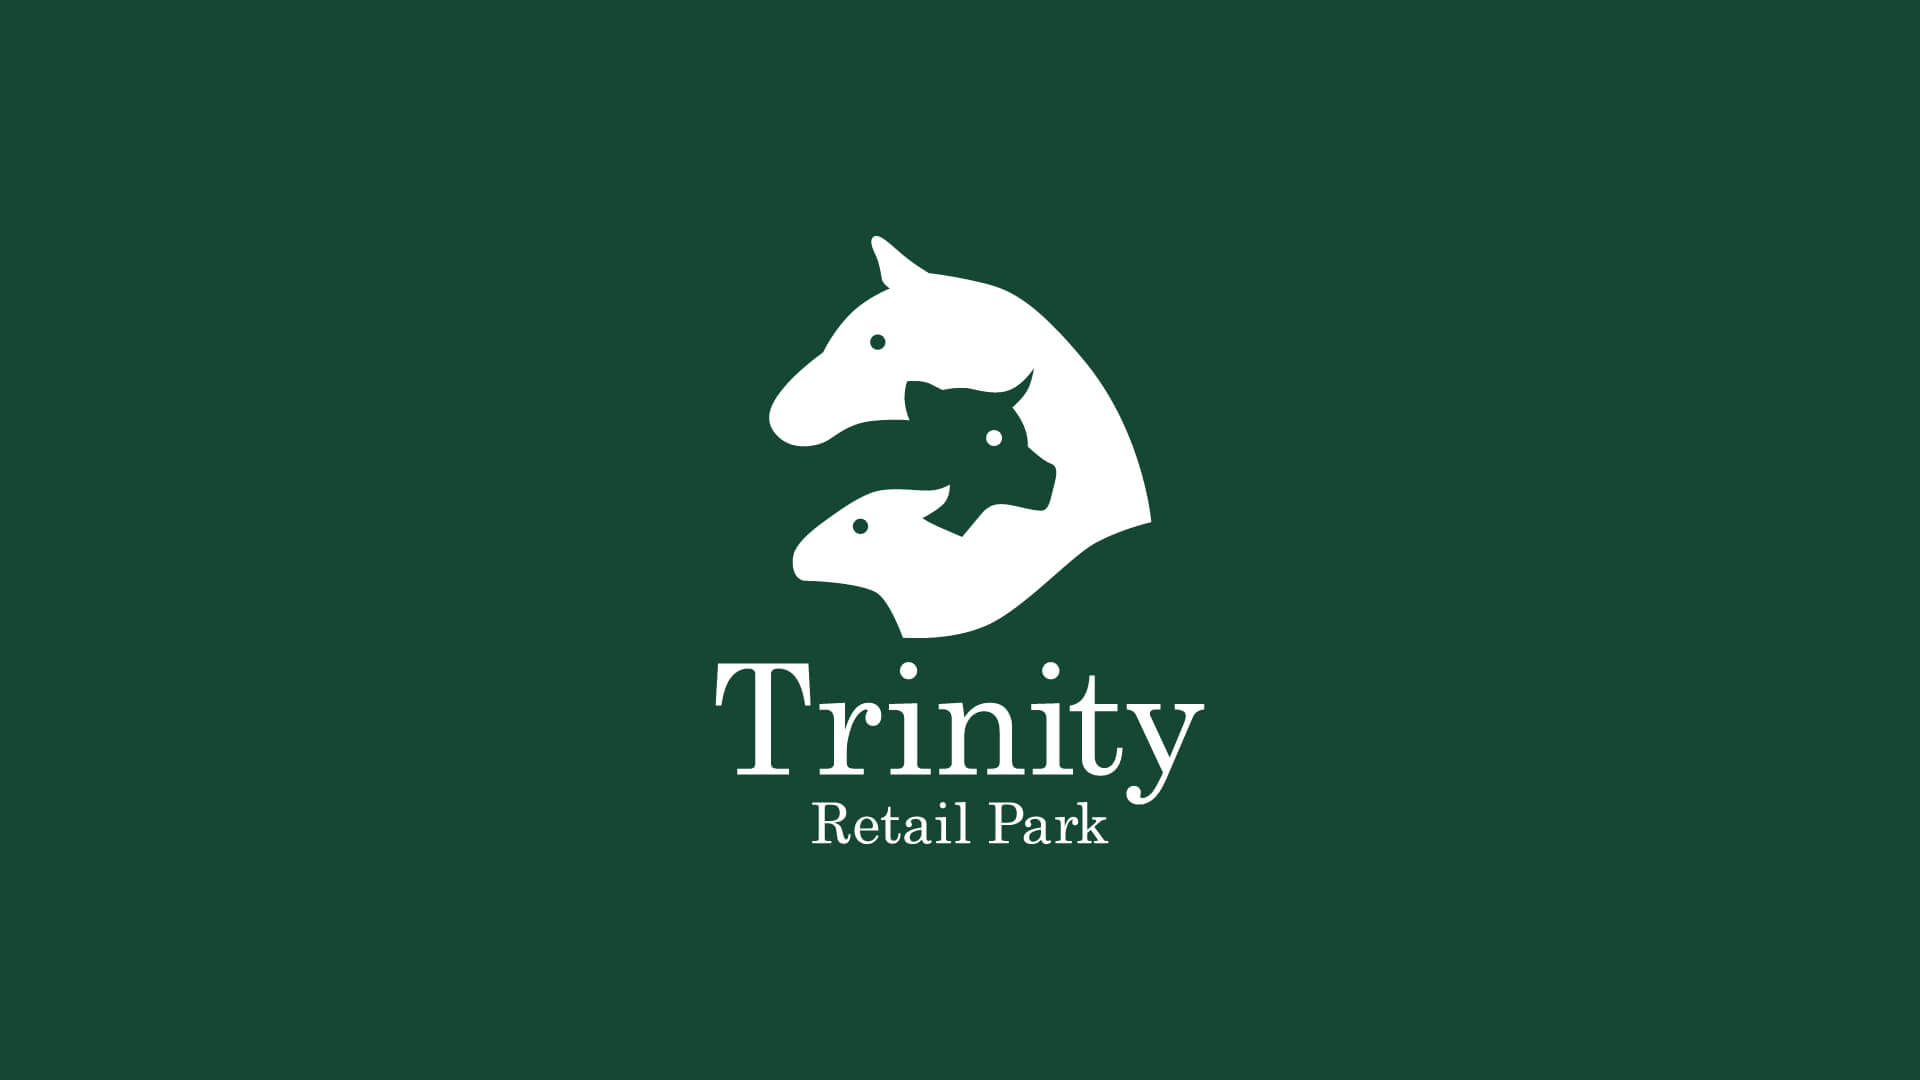 Trinity Retail Park Brand